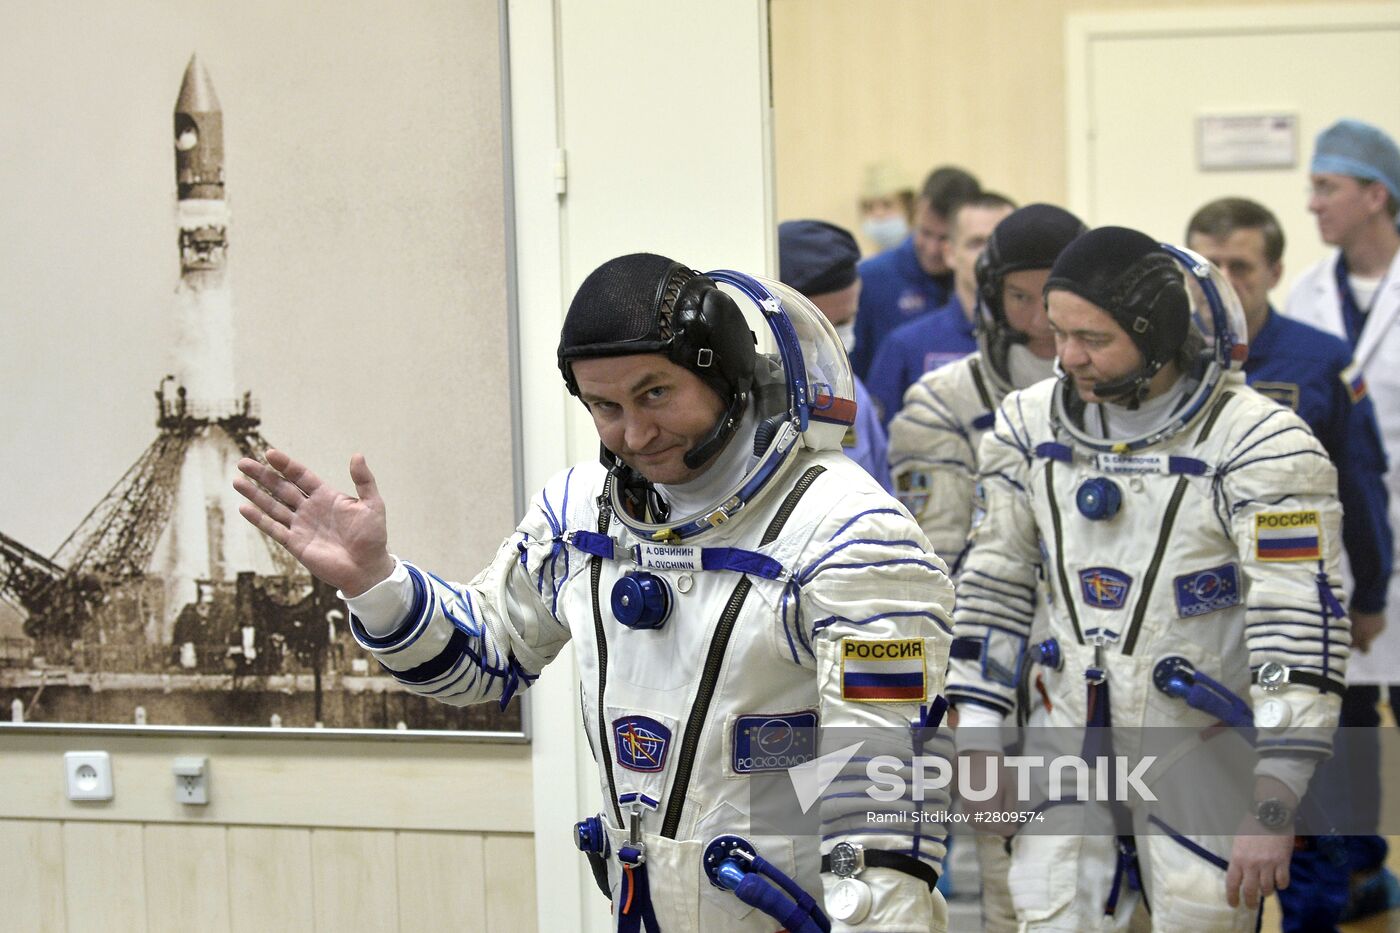 Launch of Soyuz-FG rocket with Soyuz TMA-20M spacecraft from the Baikonur Cosmodrome